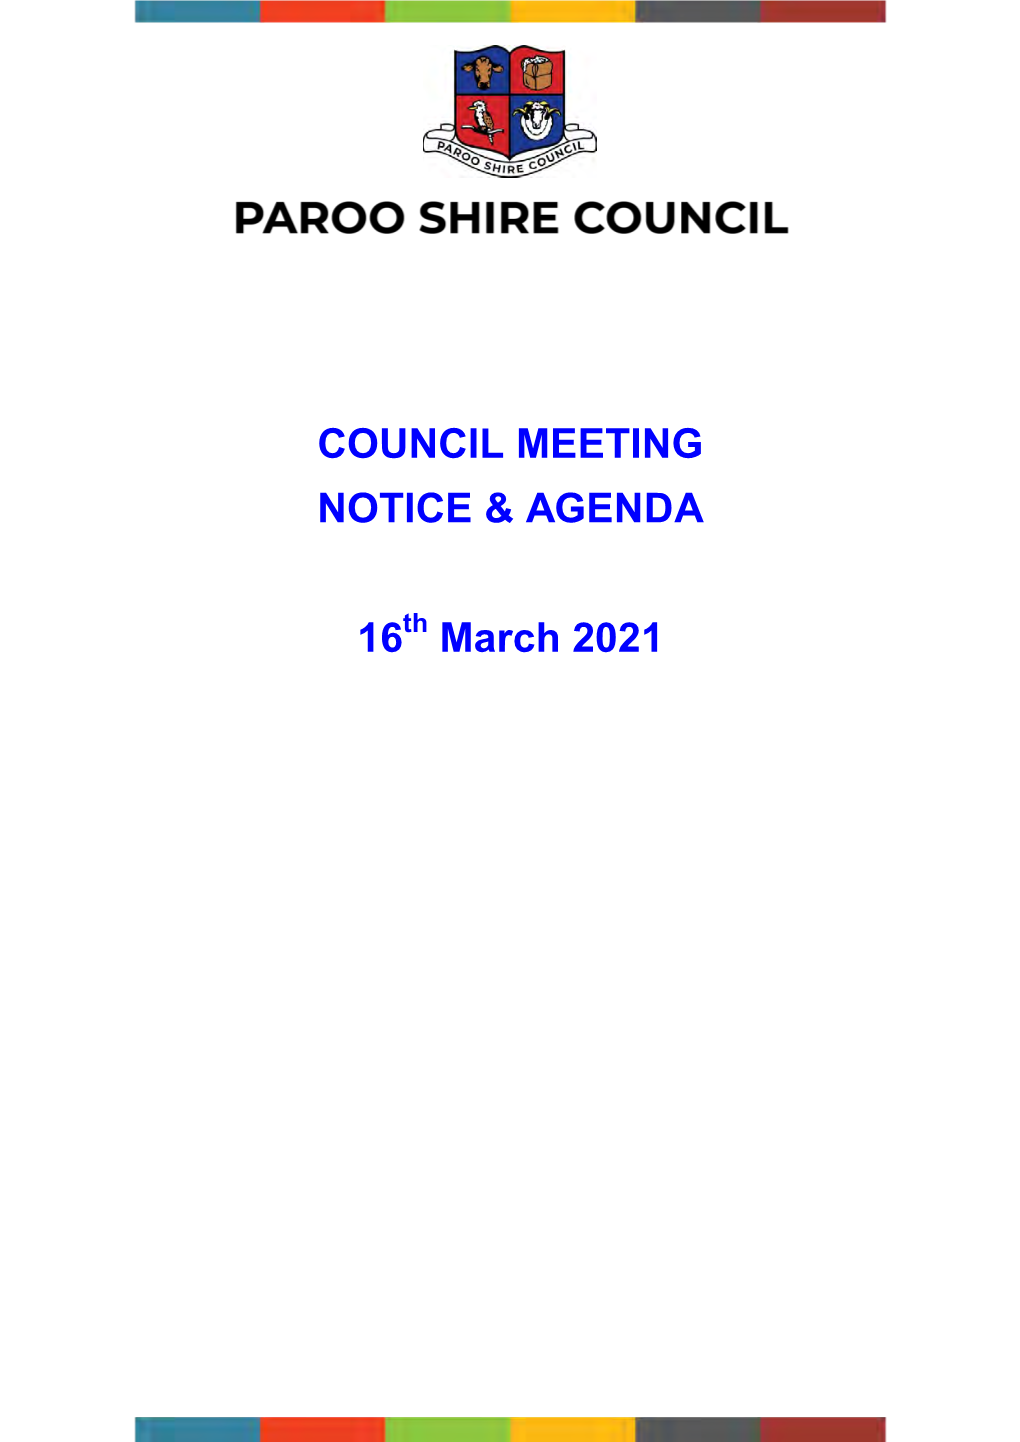 COUNCIL MEETING NOTICE & AGENDA 16 March 2021